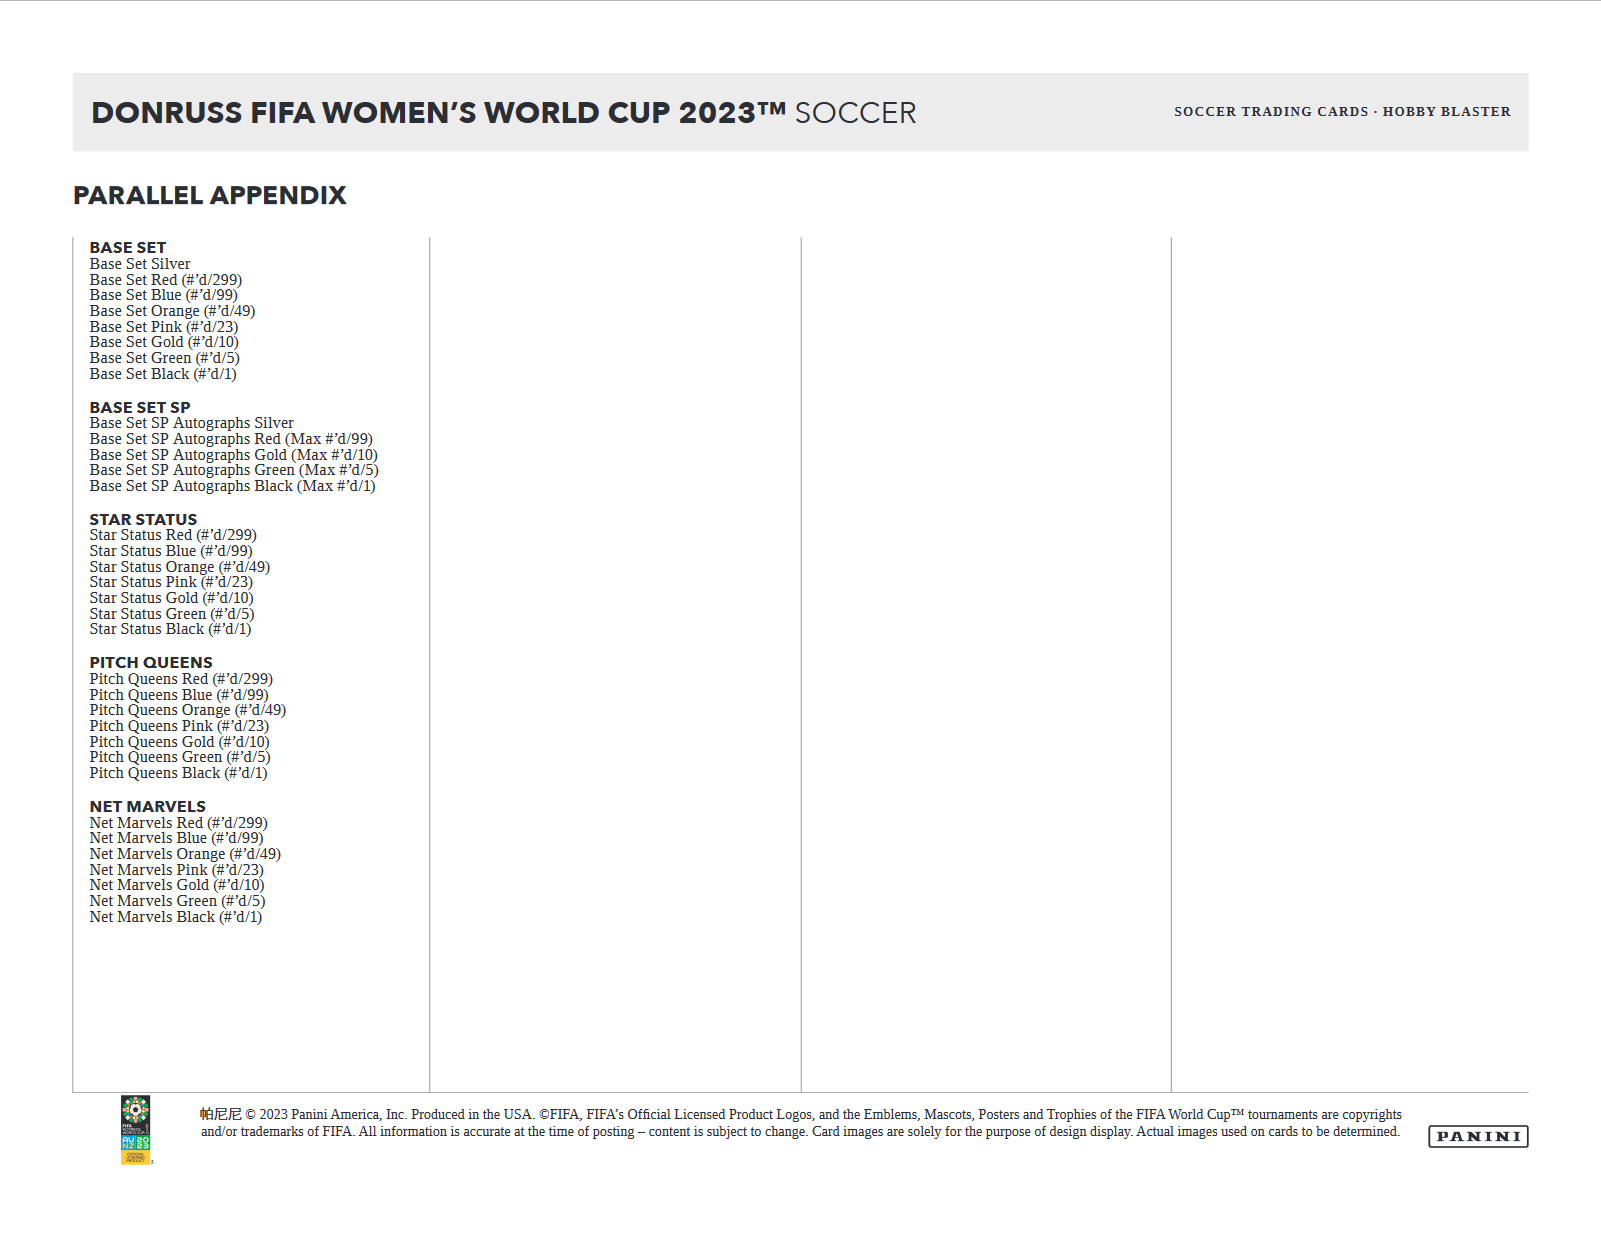 2023 Panini Donruss FIFA Women's World Cup Soccer Hobby Blaster Case